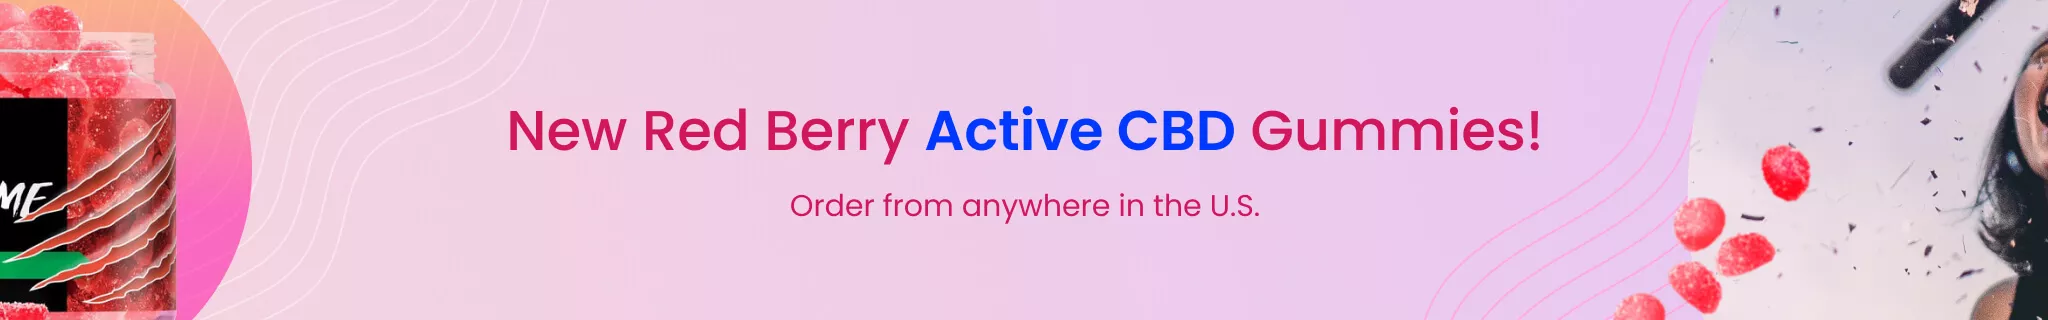 Active CBD Gummies